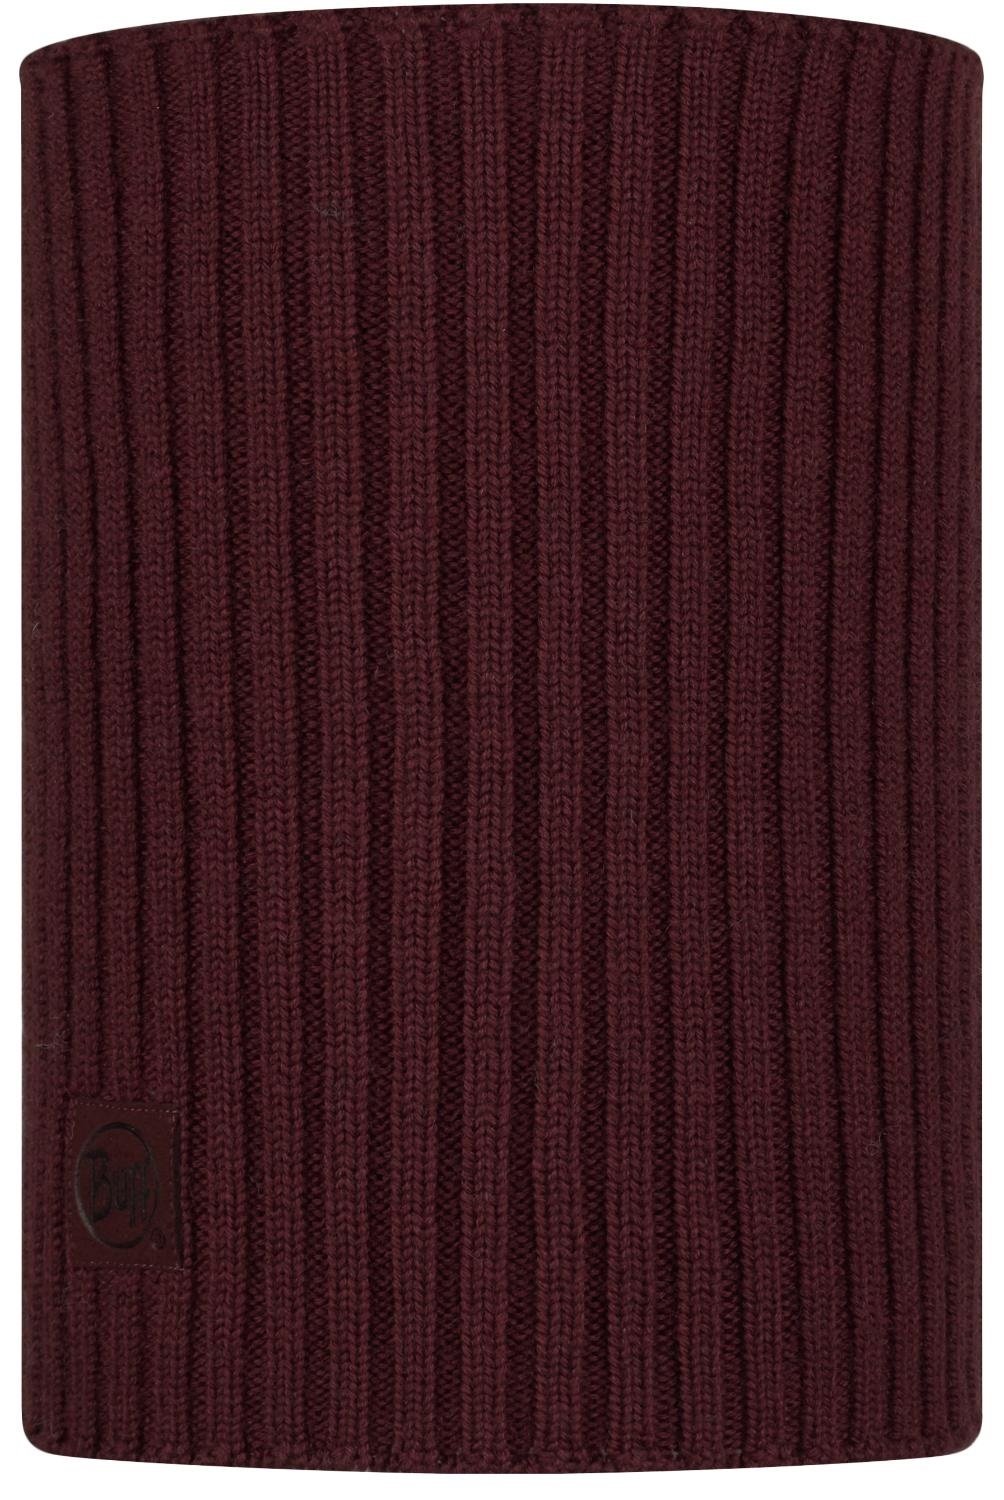 Шарф Buff Knitted Neckwarmer Comfort Norval Maroon, US:one size, 124244.632.10.00 душевая система dorff comfort d0708000bl